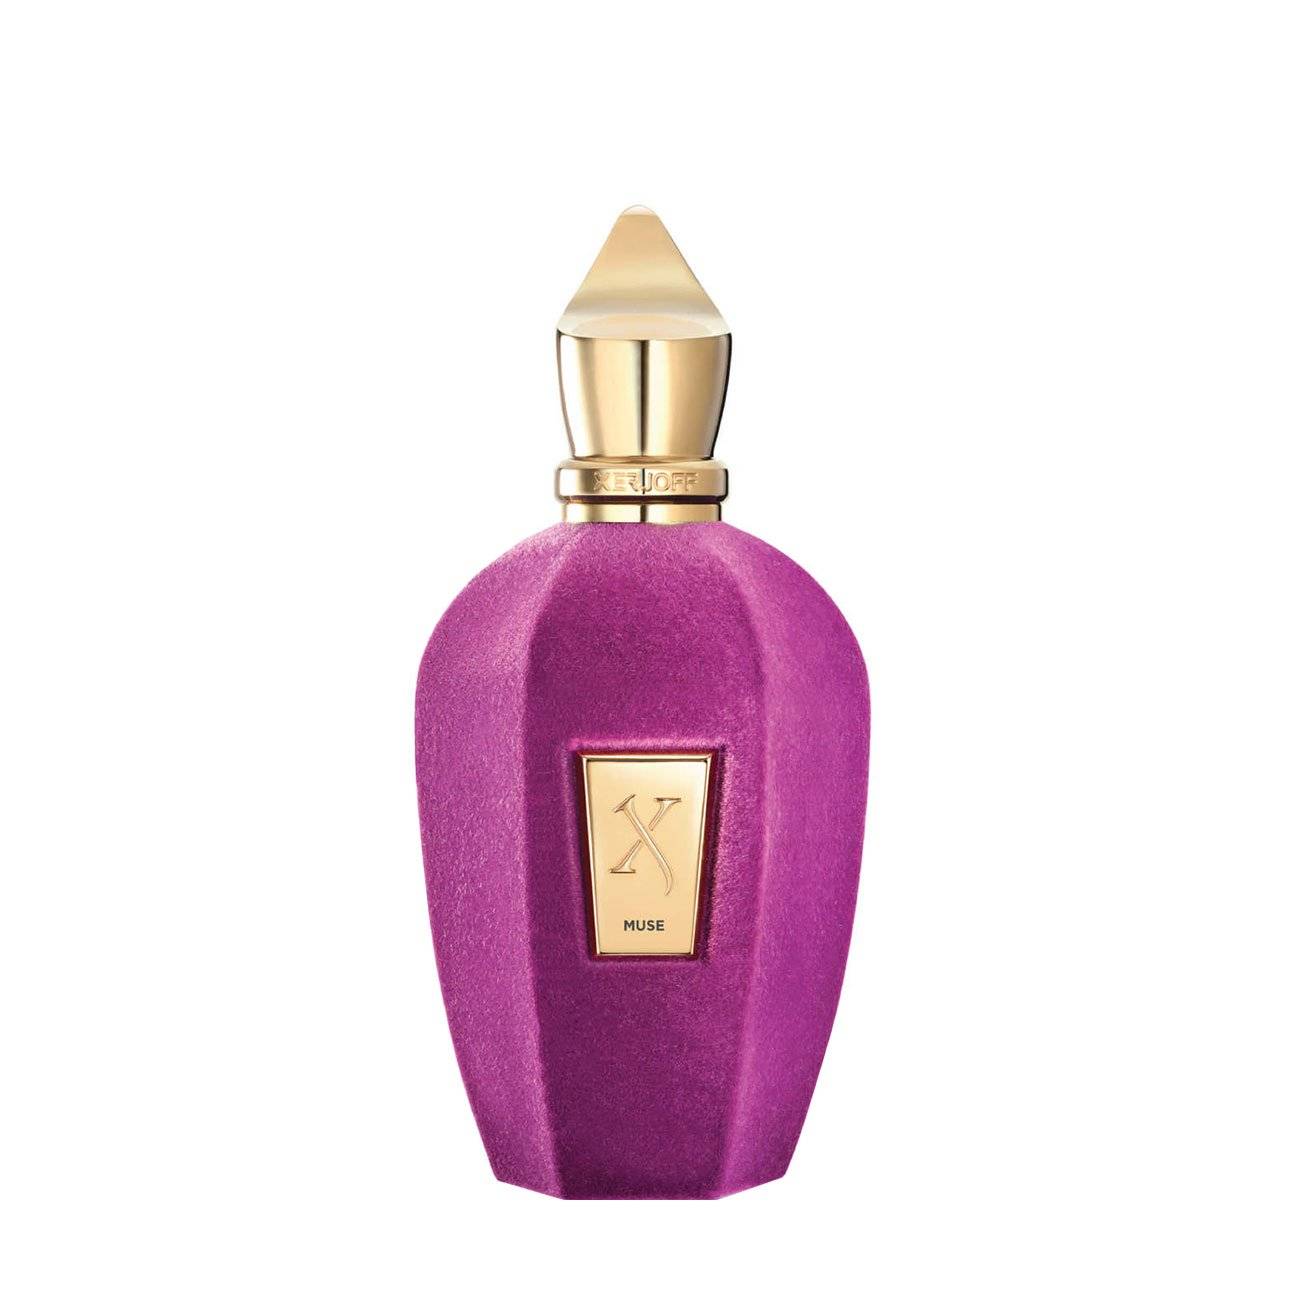 Parfum de niche Xerjoff MUSE 100ml cu comanda online